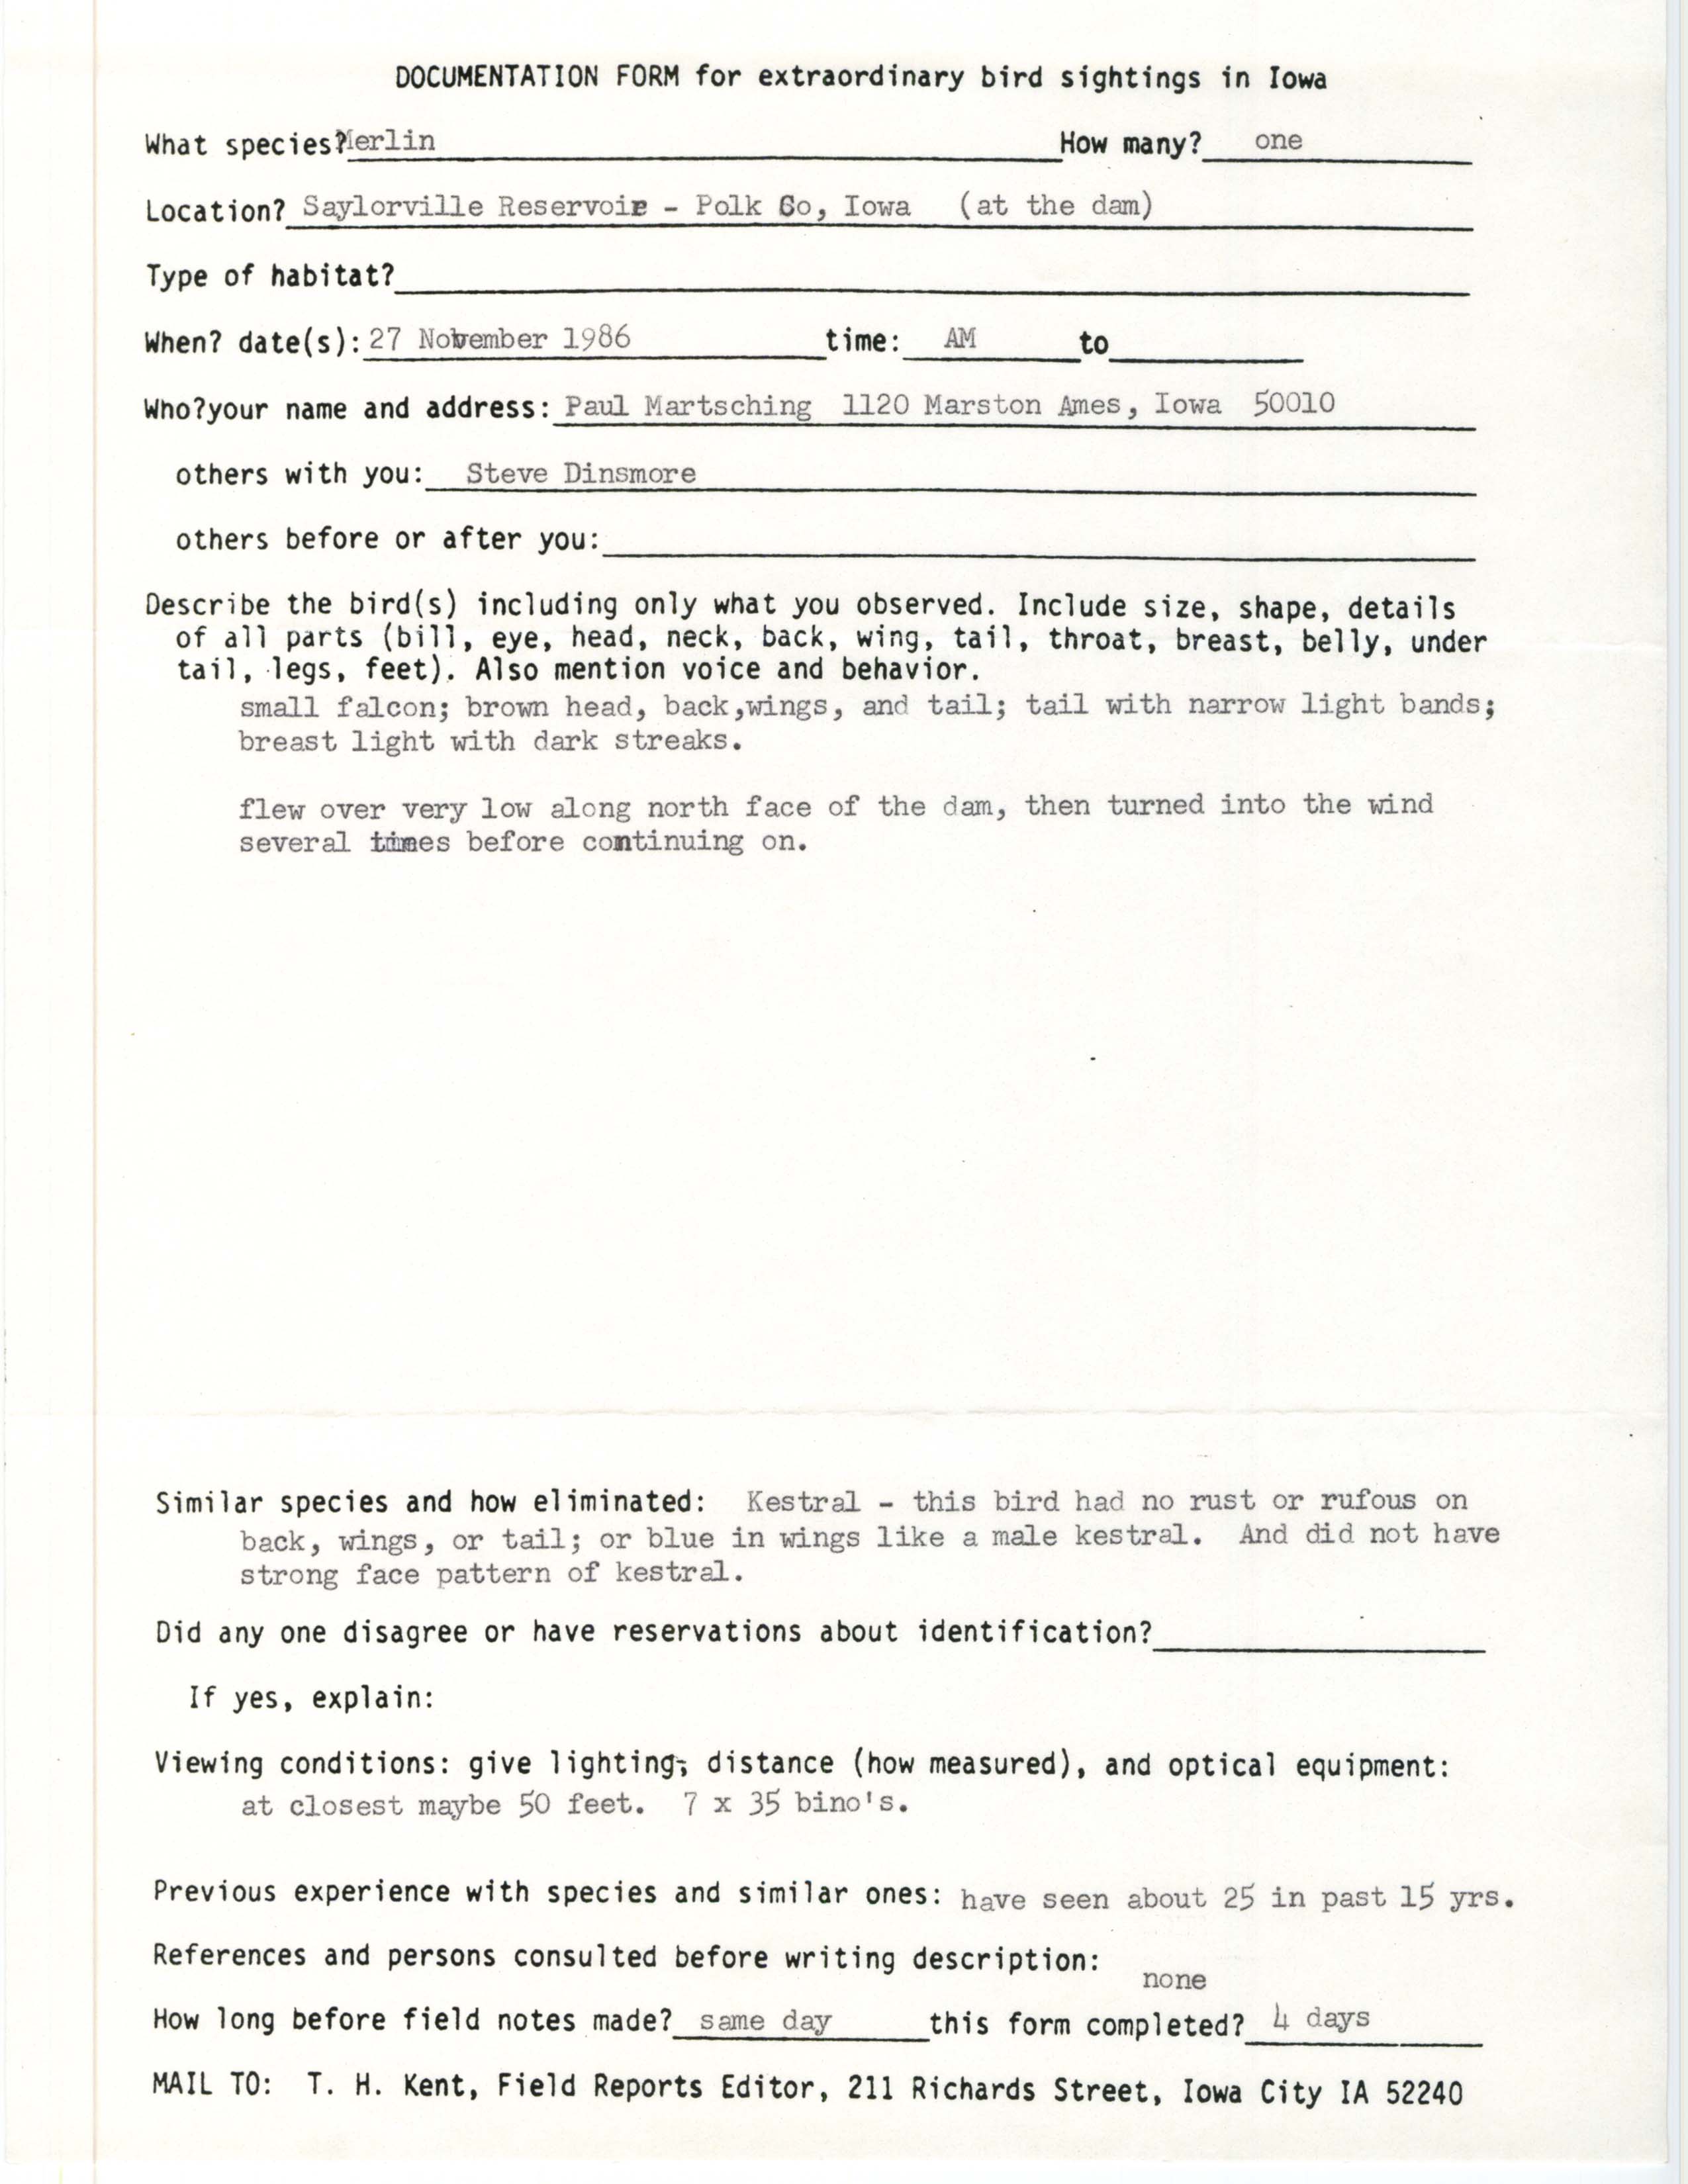 Rare bird documentation form for Merlin at Saylorville Reservoir, 1986